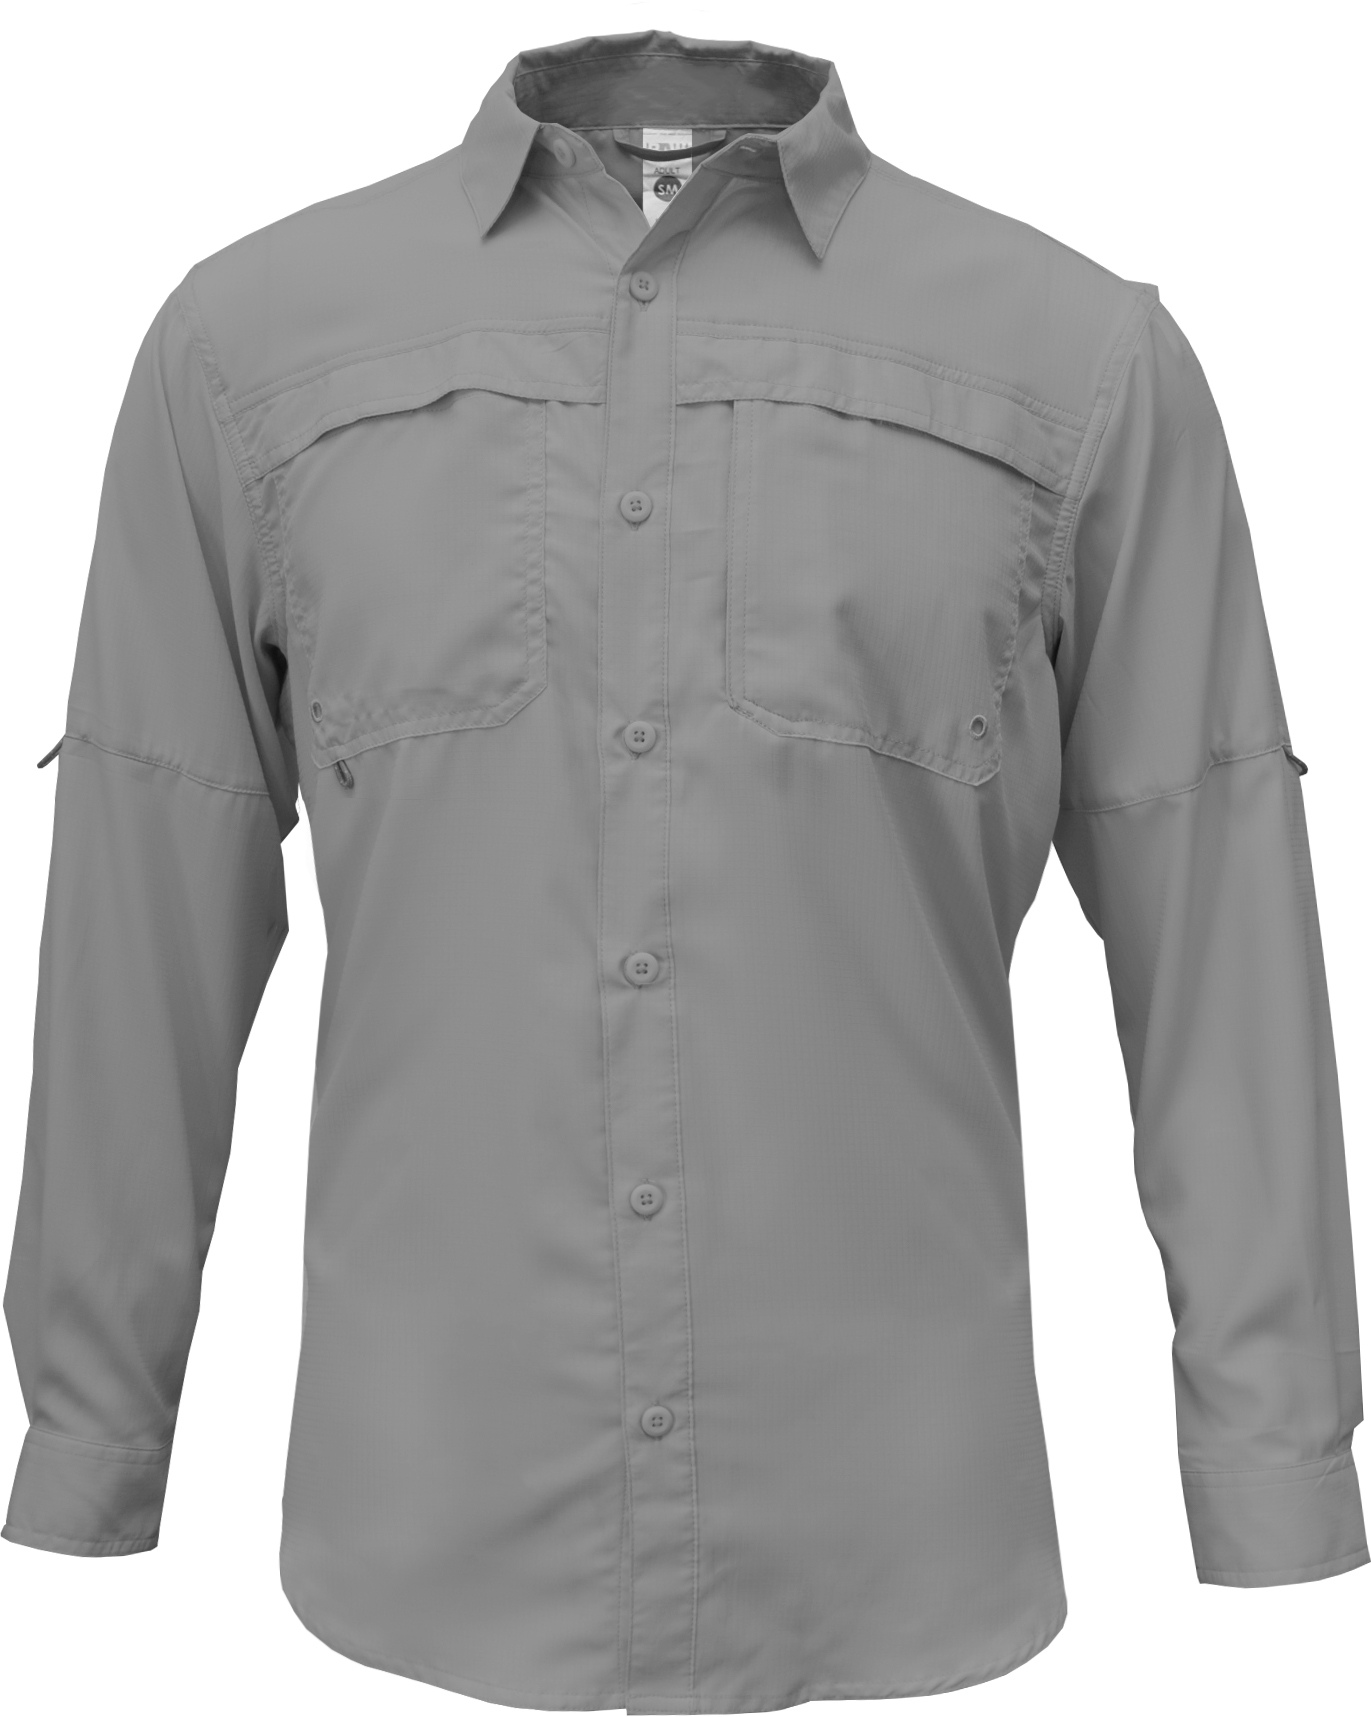 BAW Athletic Wear 3000 - Adult Long Sleeve Fishing Shirt